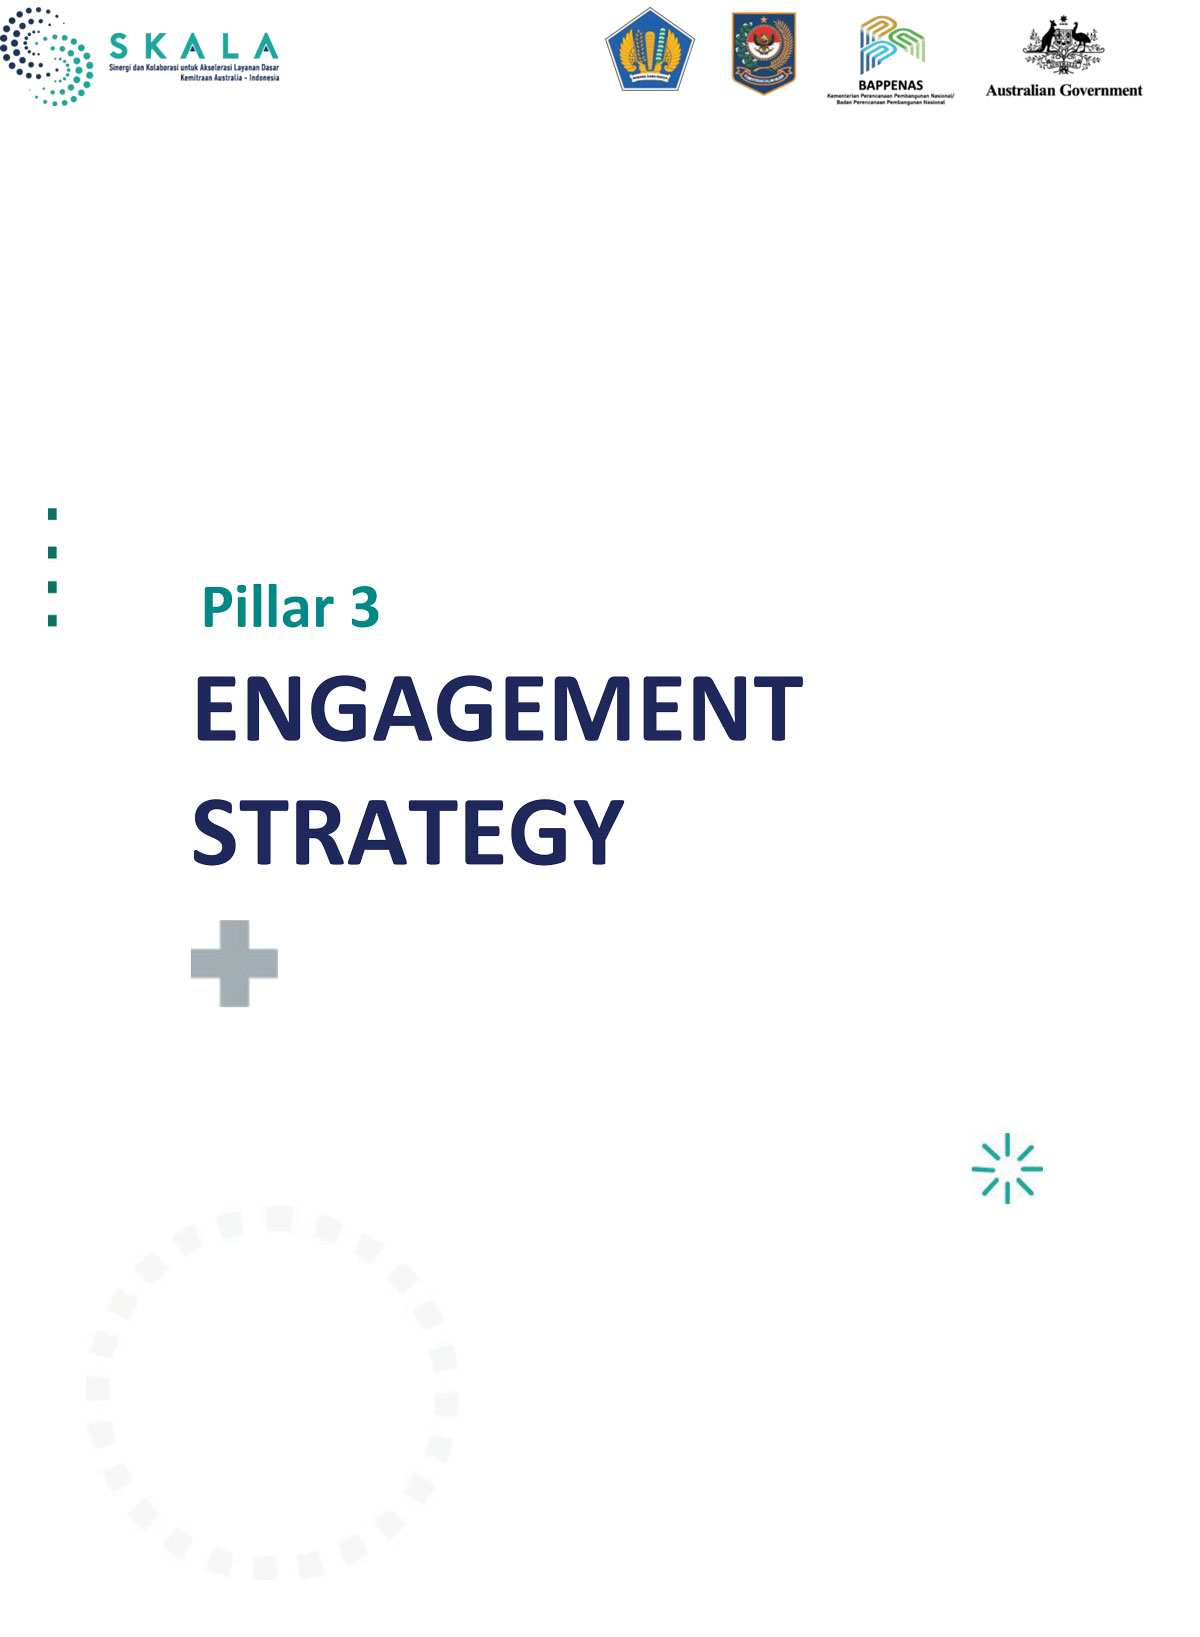 Pillar 3 Engagement Strategy